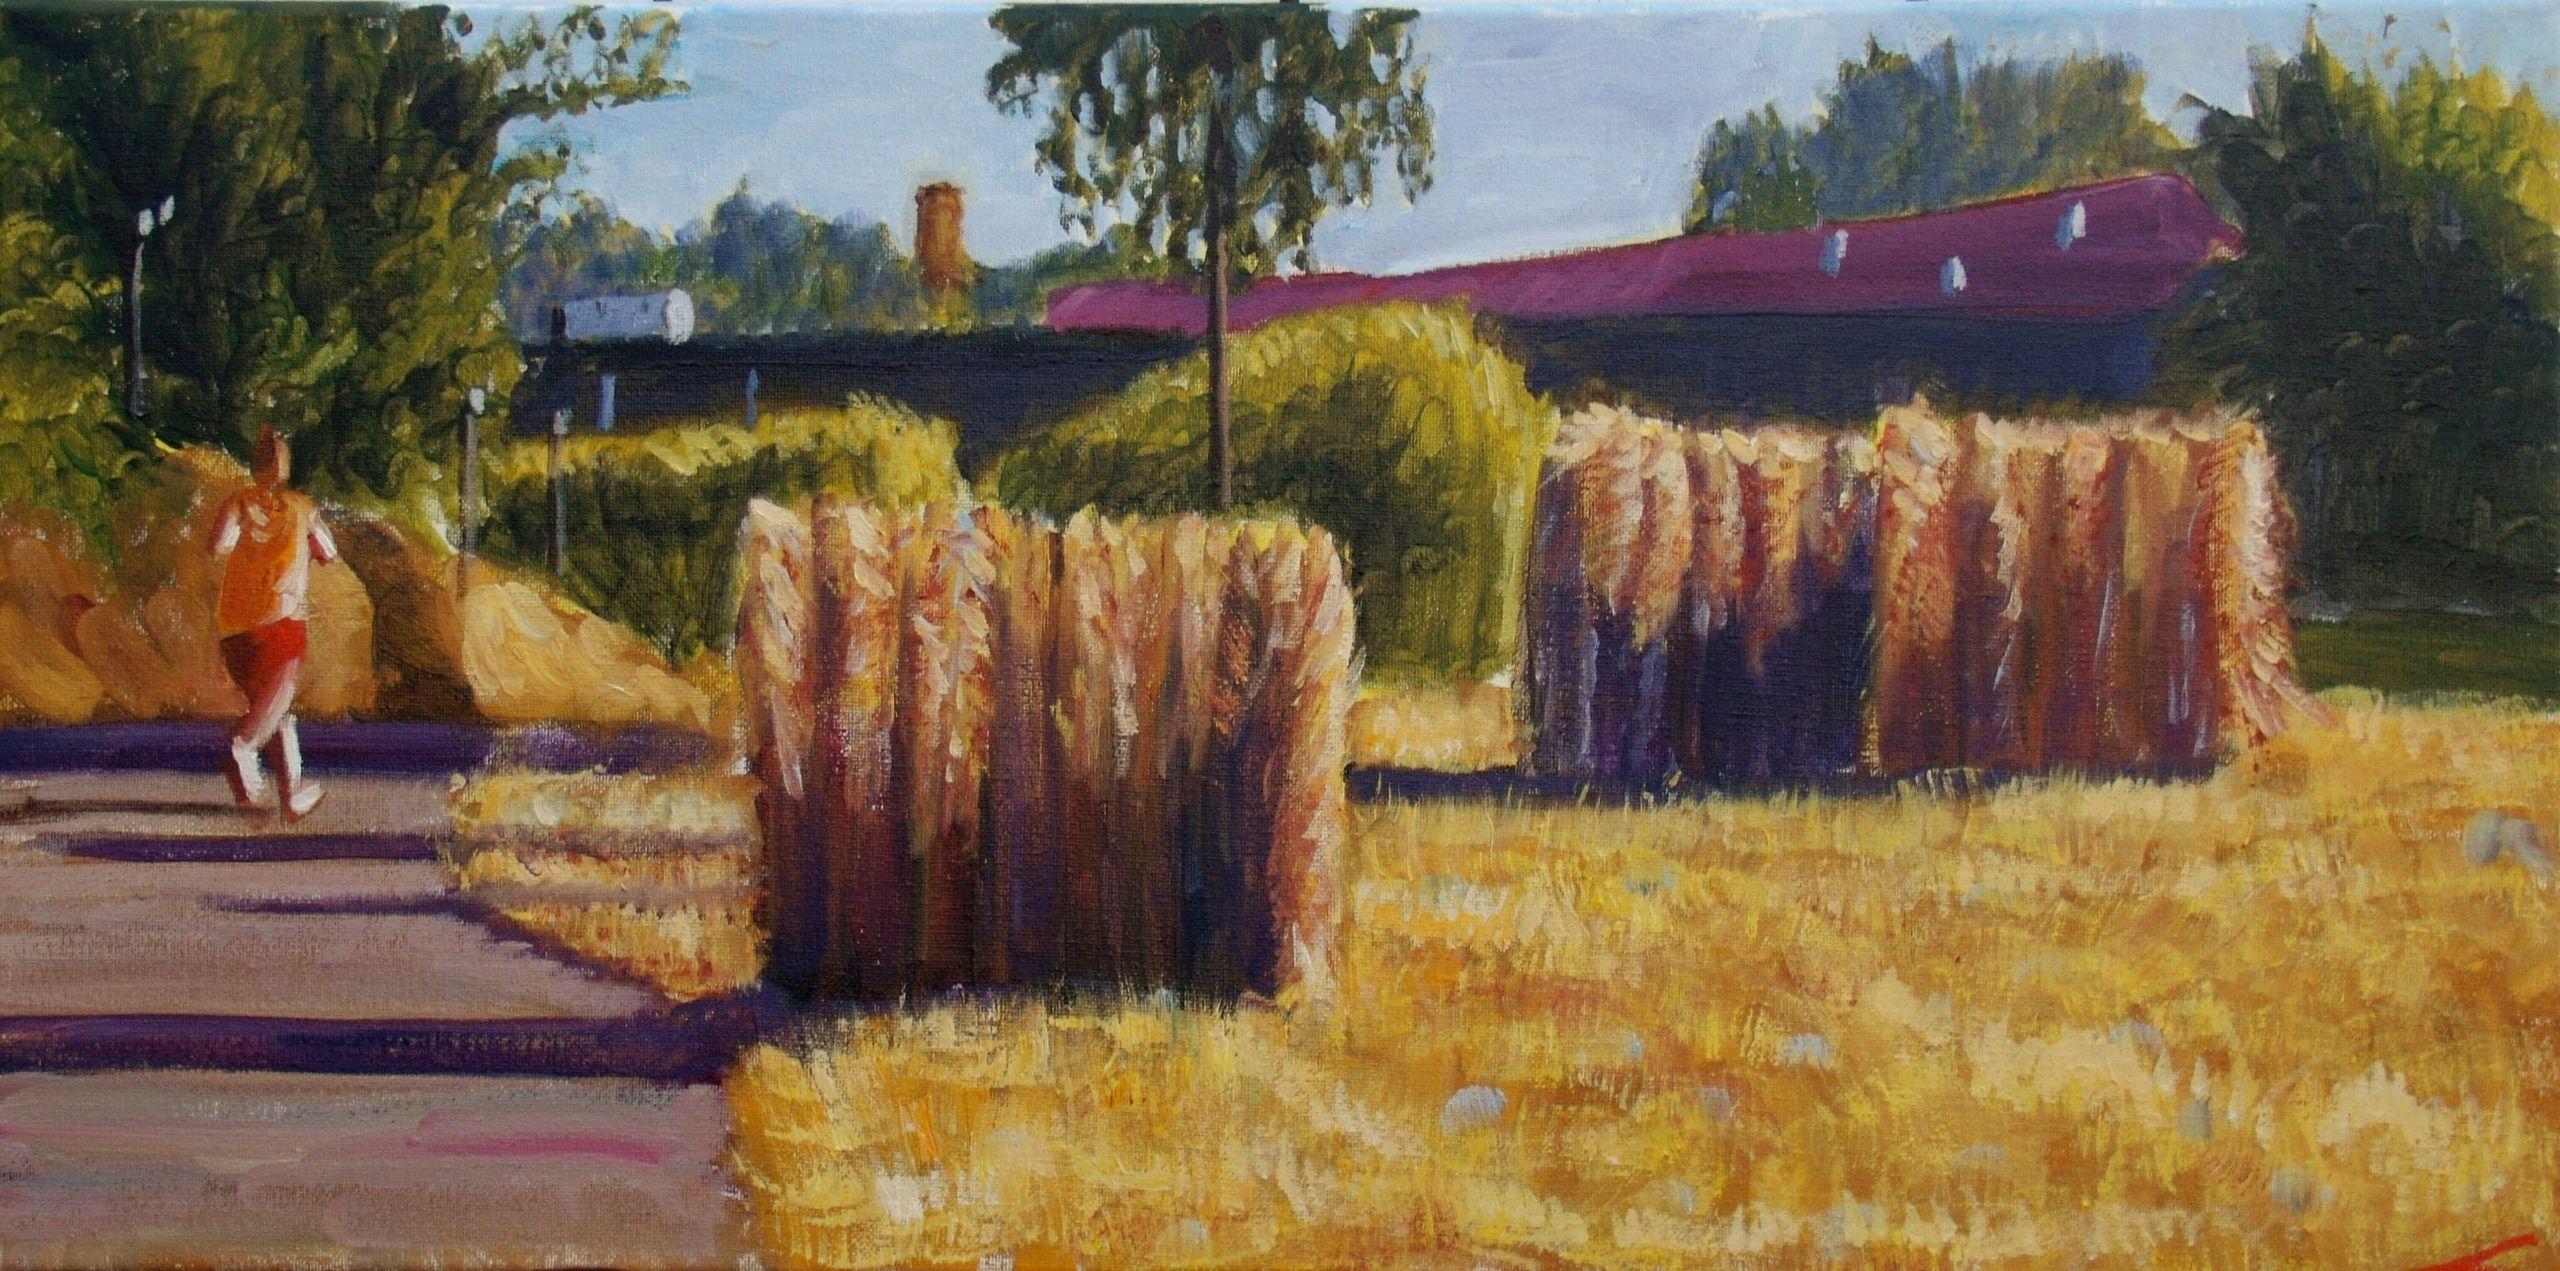 Elena Sokolova Landscape Painting - Three haystacks, Painting, Oil on Canvas